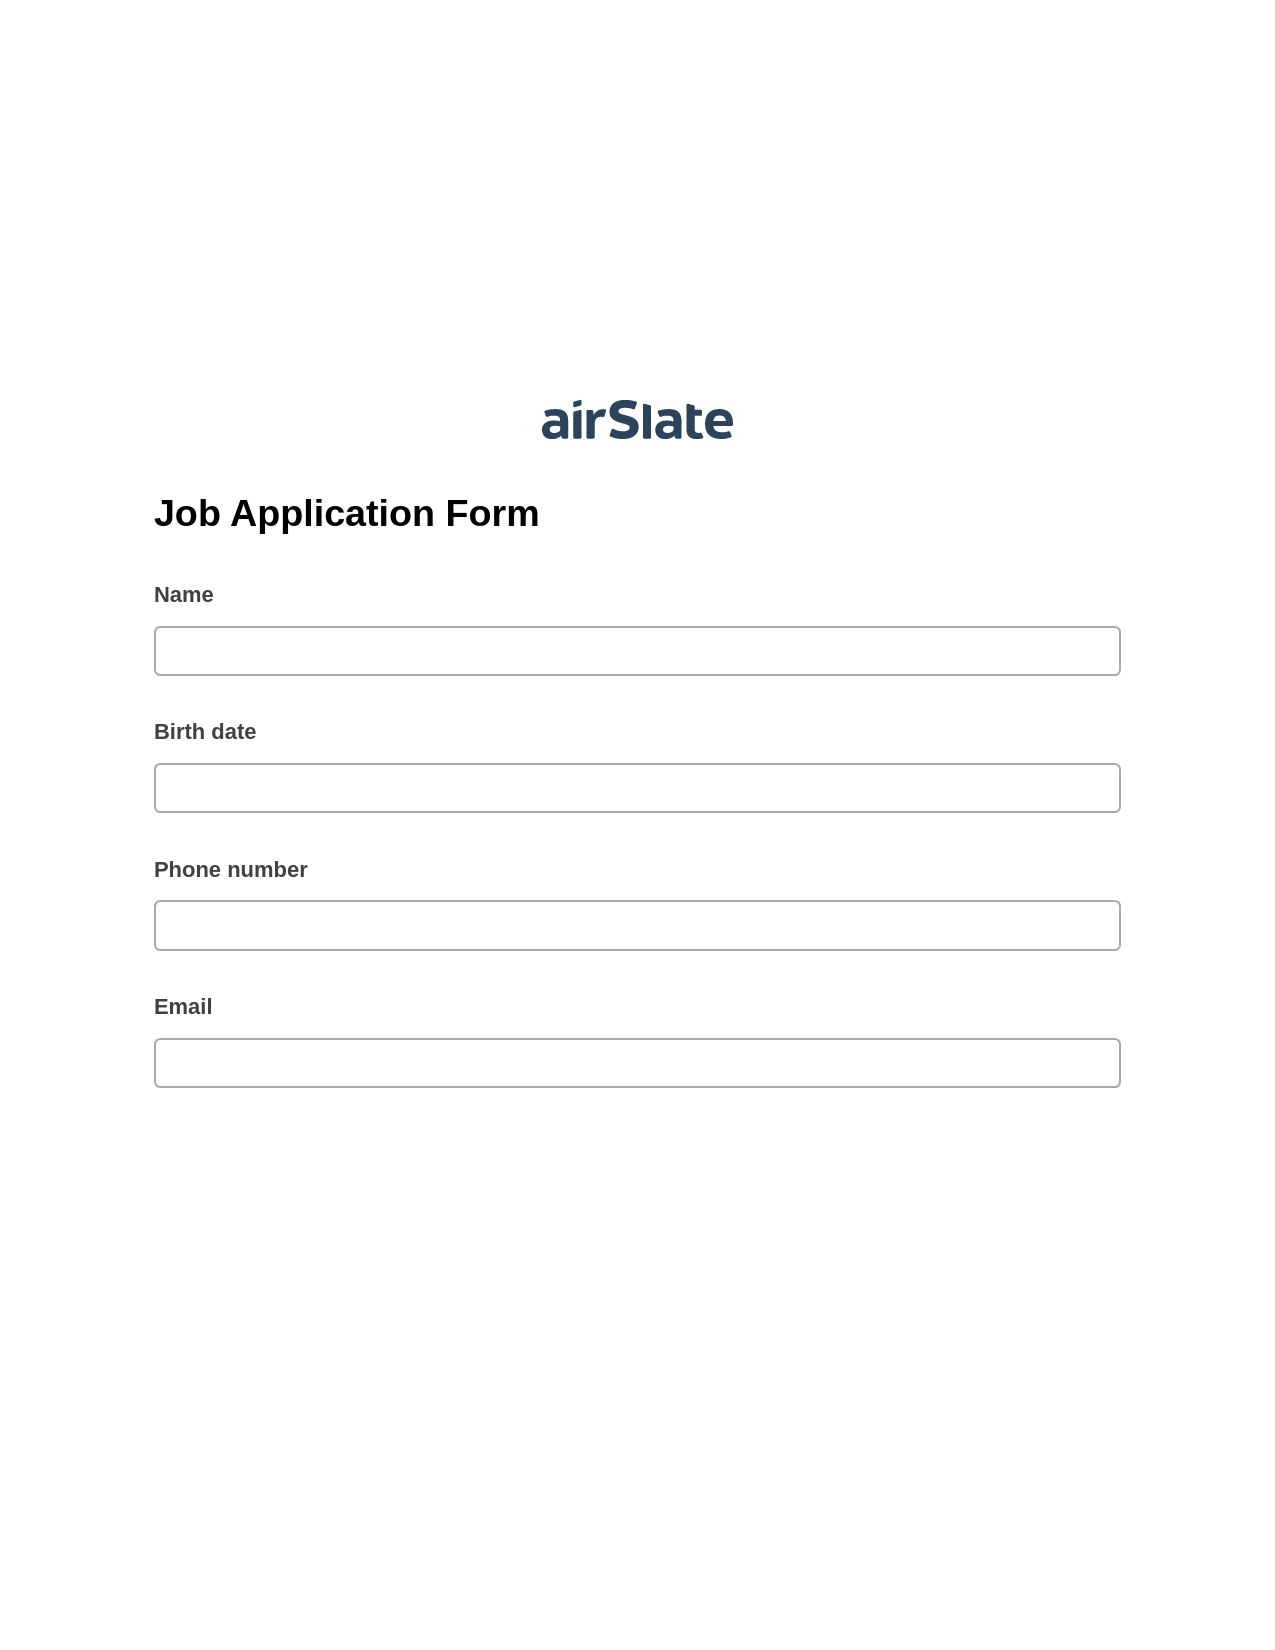 Job Application Form Pre-fill from MySQL Dropdown Options Bot, Update Salesforce Record Bot, Webhook Postfinish Bot